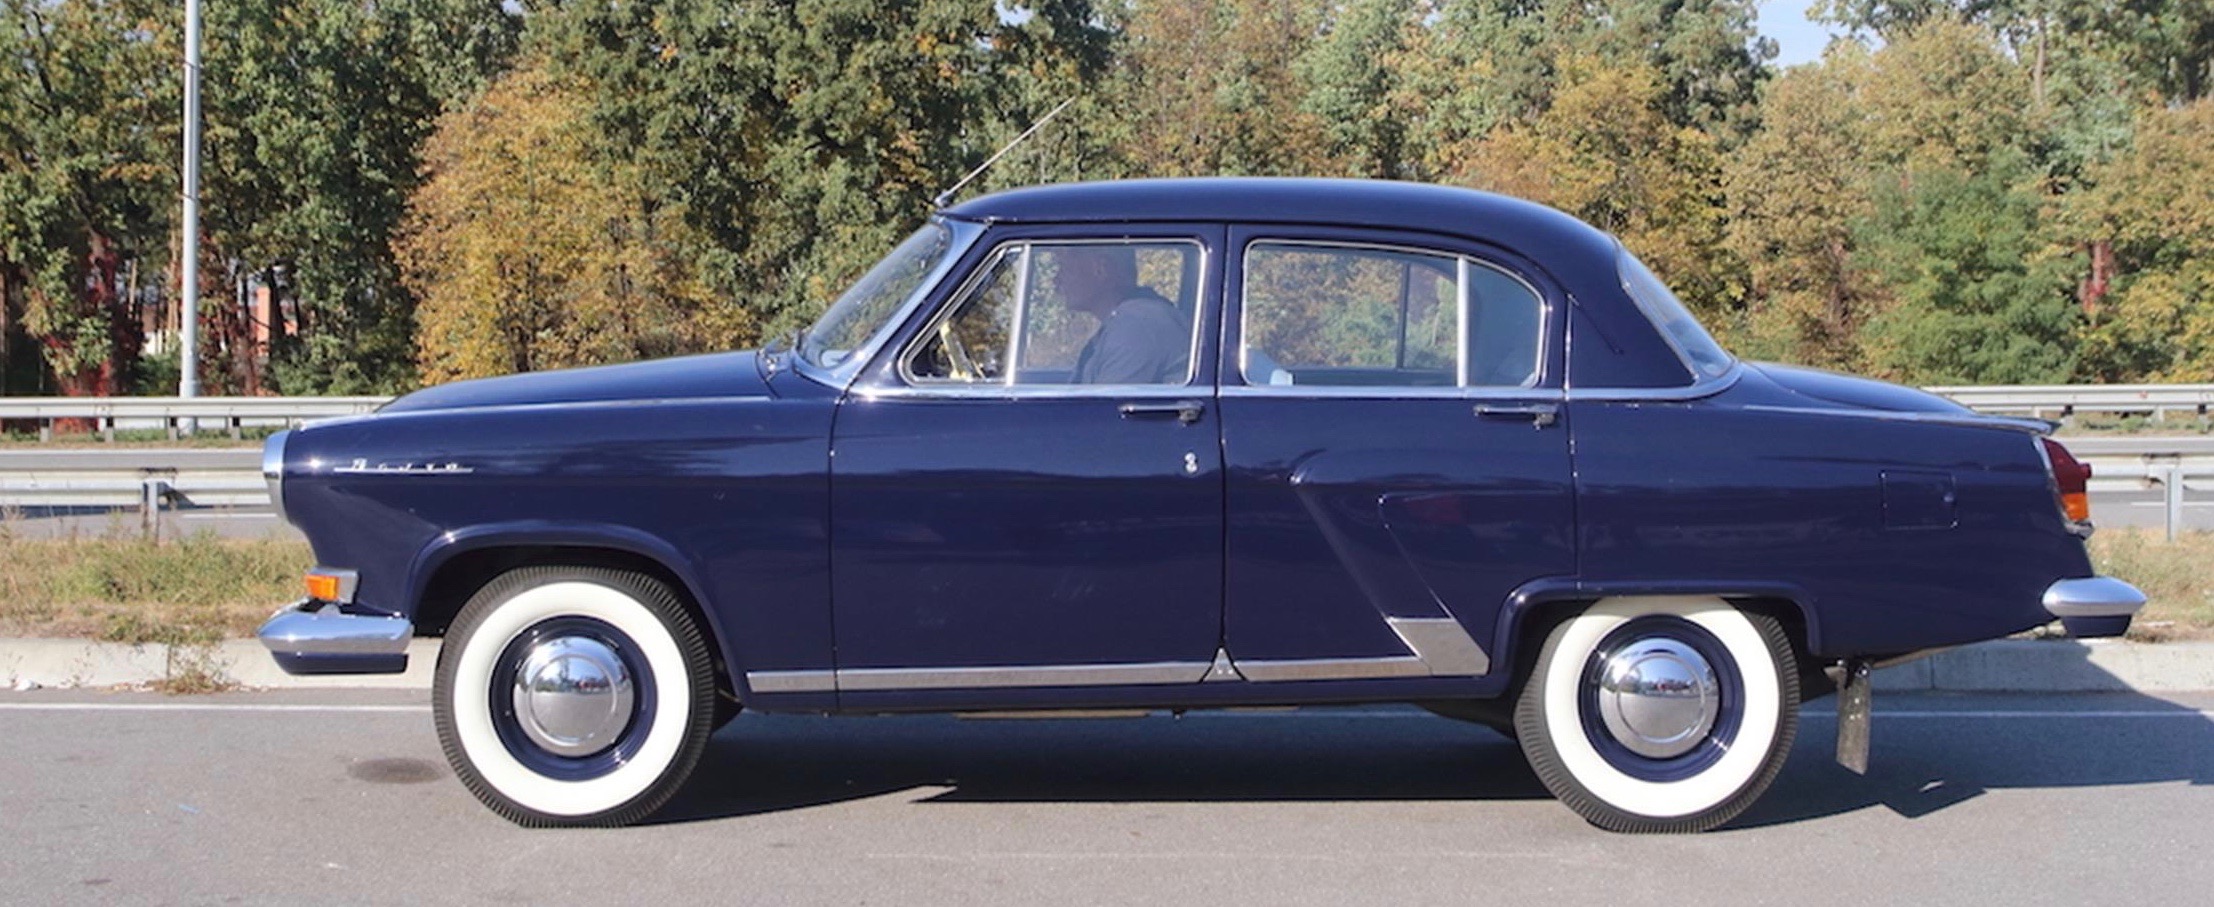 Soviet-era car, Soviet-era car restored to KGB specification, ClassicCars.com Journal